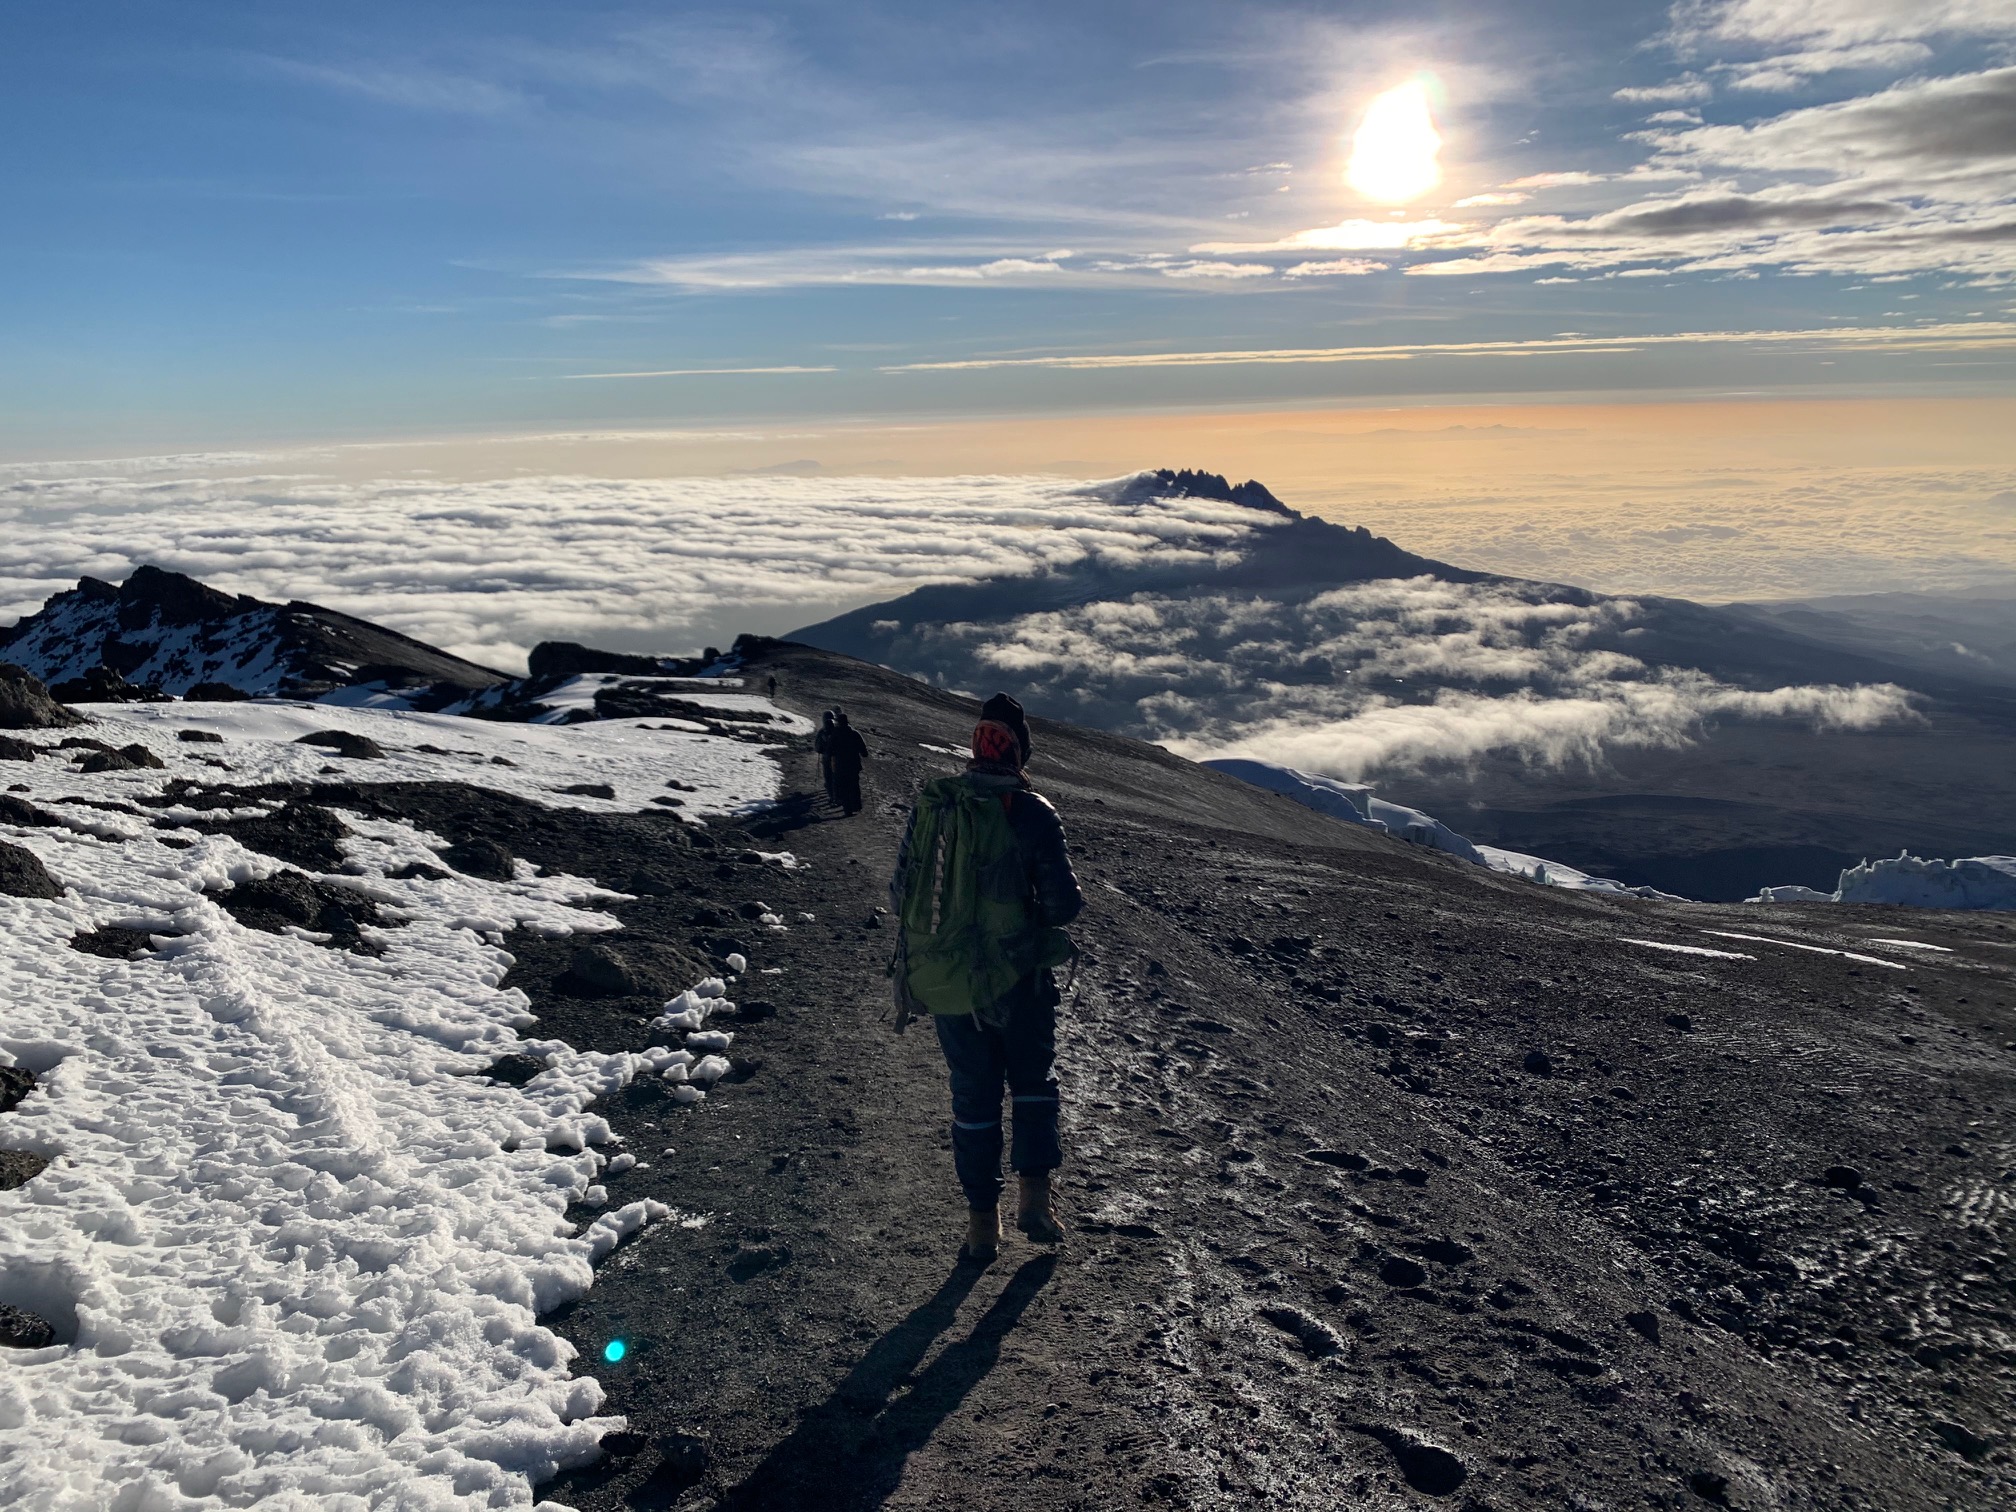 The crater rim of Kilimanjaro